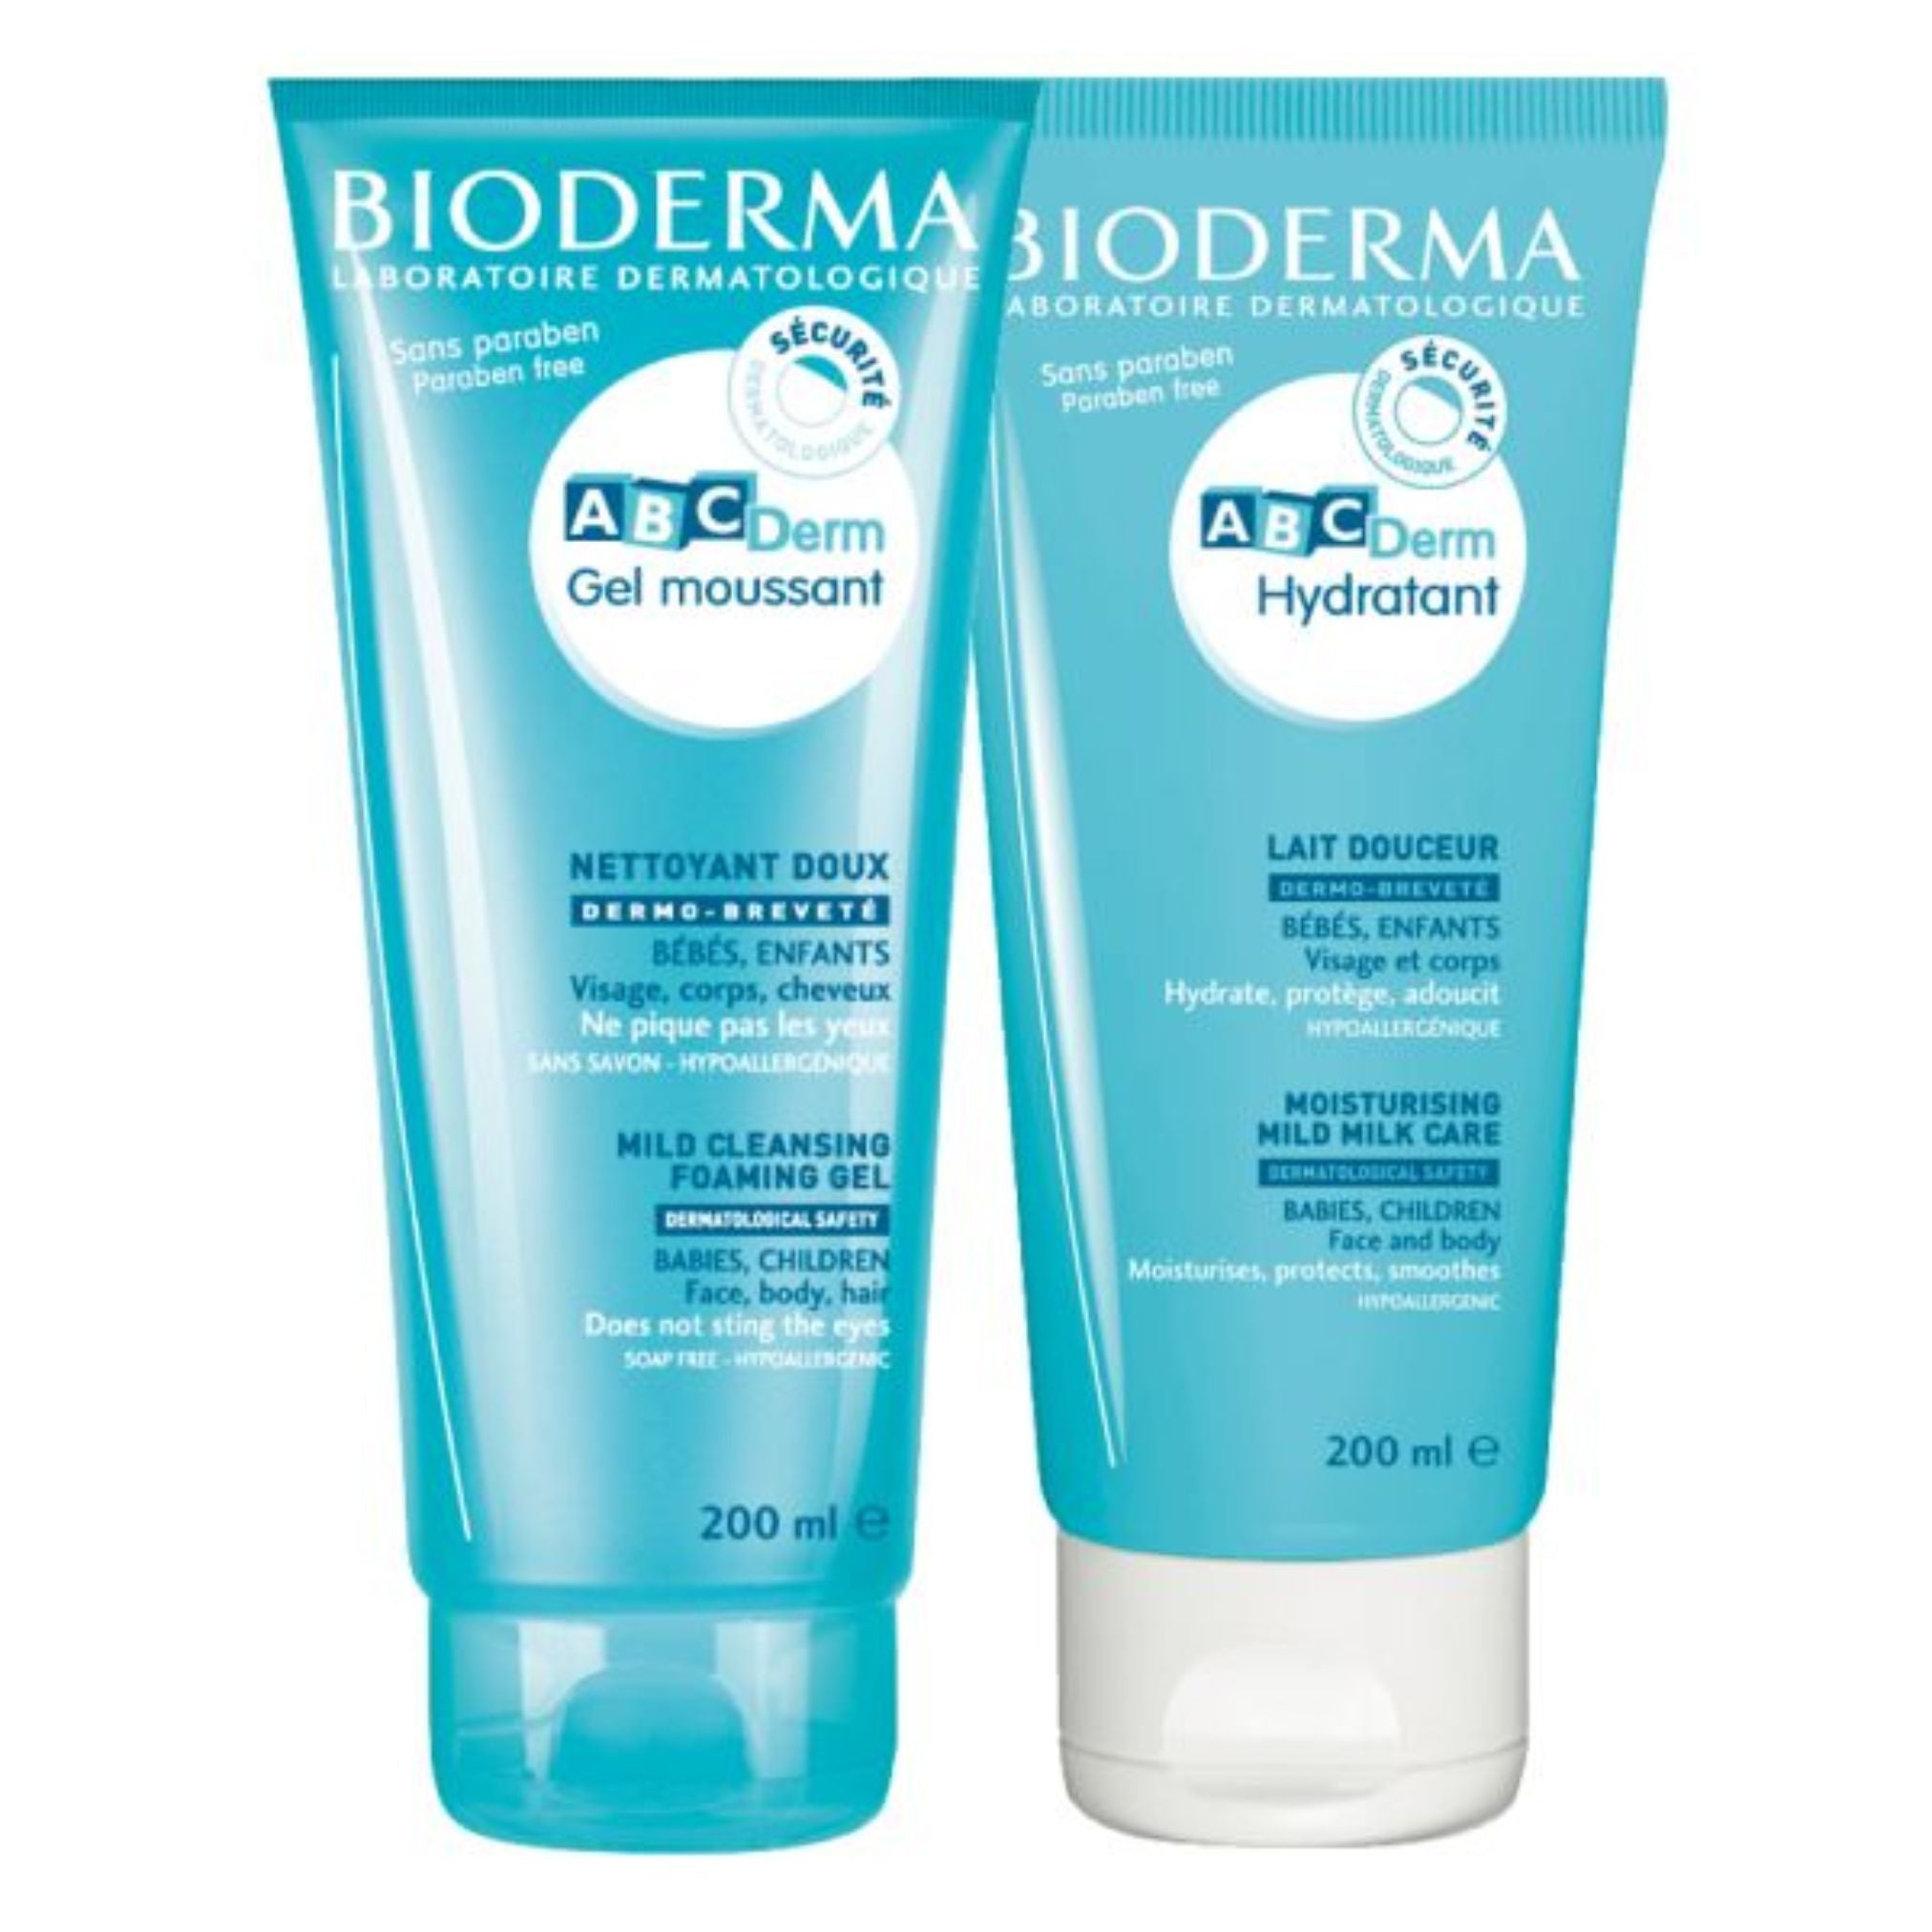 Bioderma Pack Promocional: Bioderma ABCDerm Gel Moussant 200ml + Bioderma ABCDerm Leite Hidratante 200ml